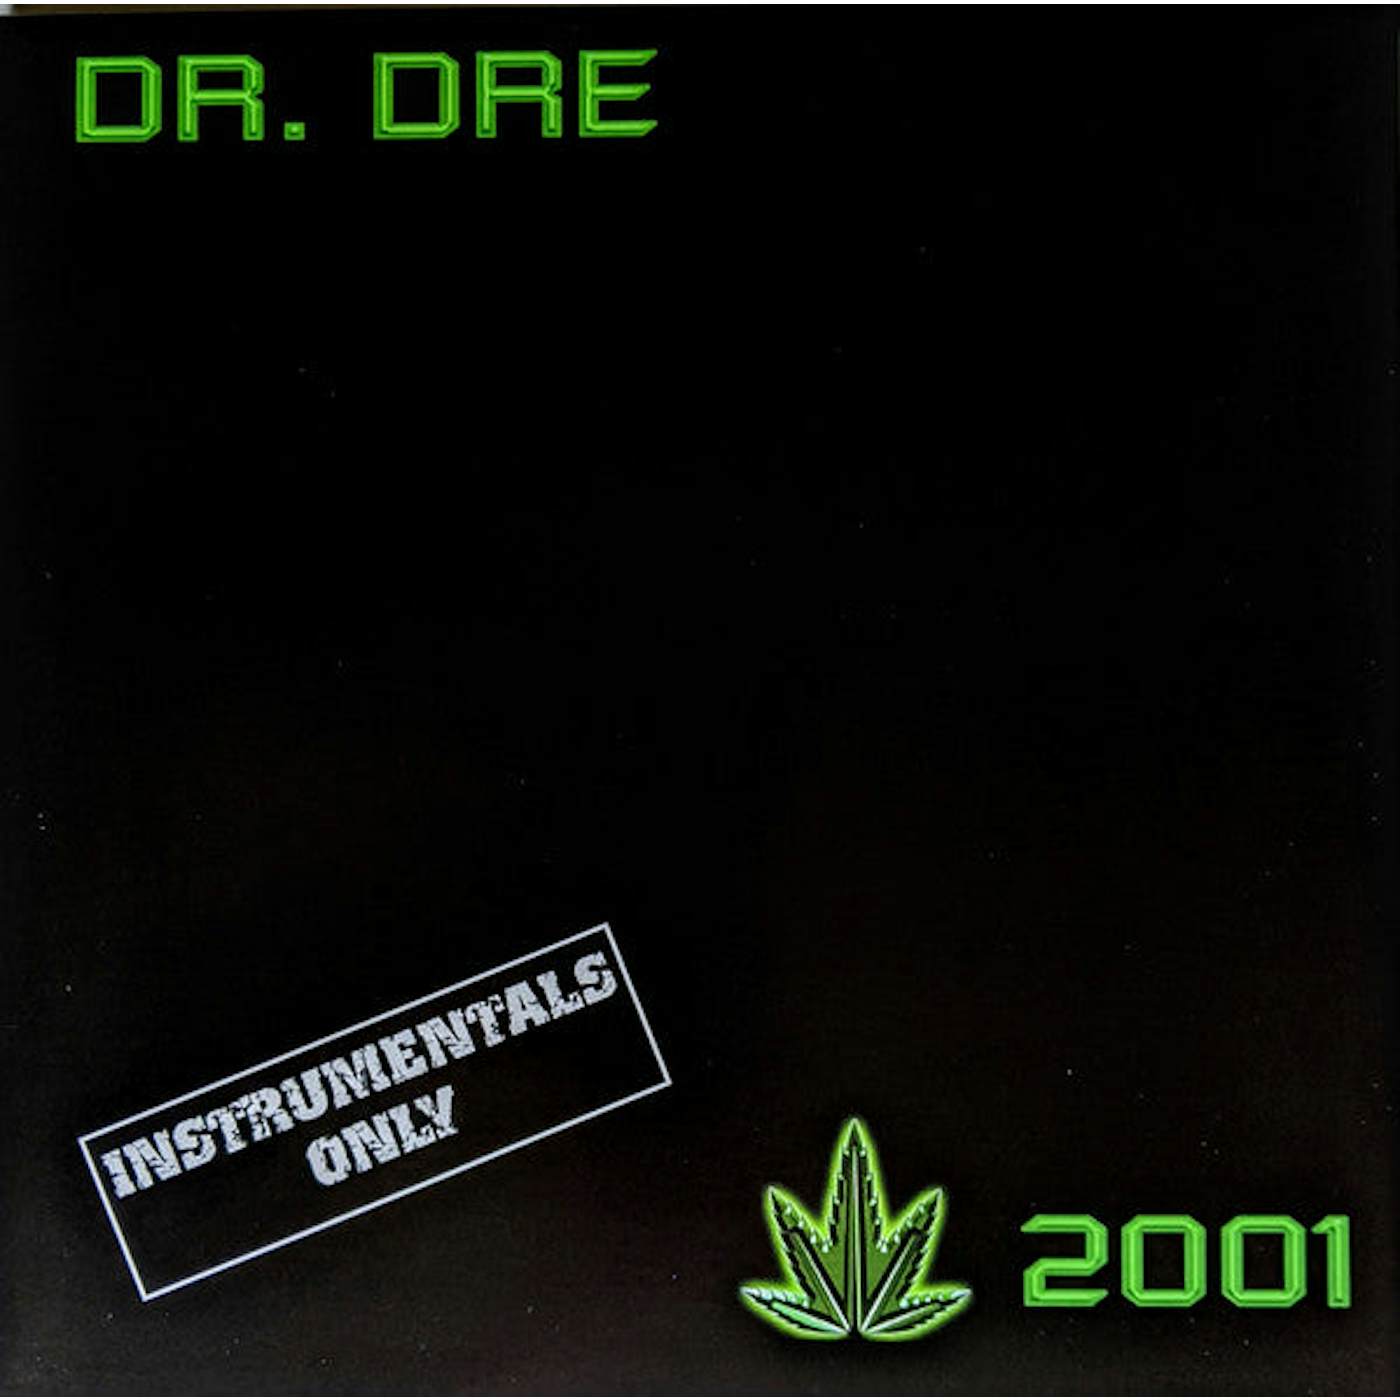 Dr. Dre LP Vinyl Record - 2001 Instruments